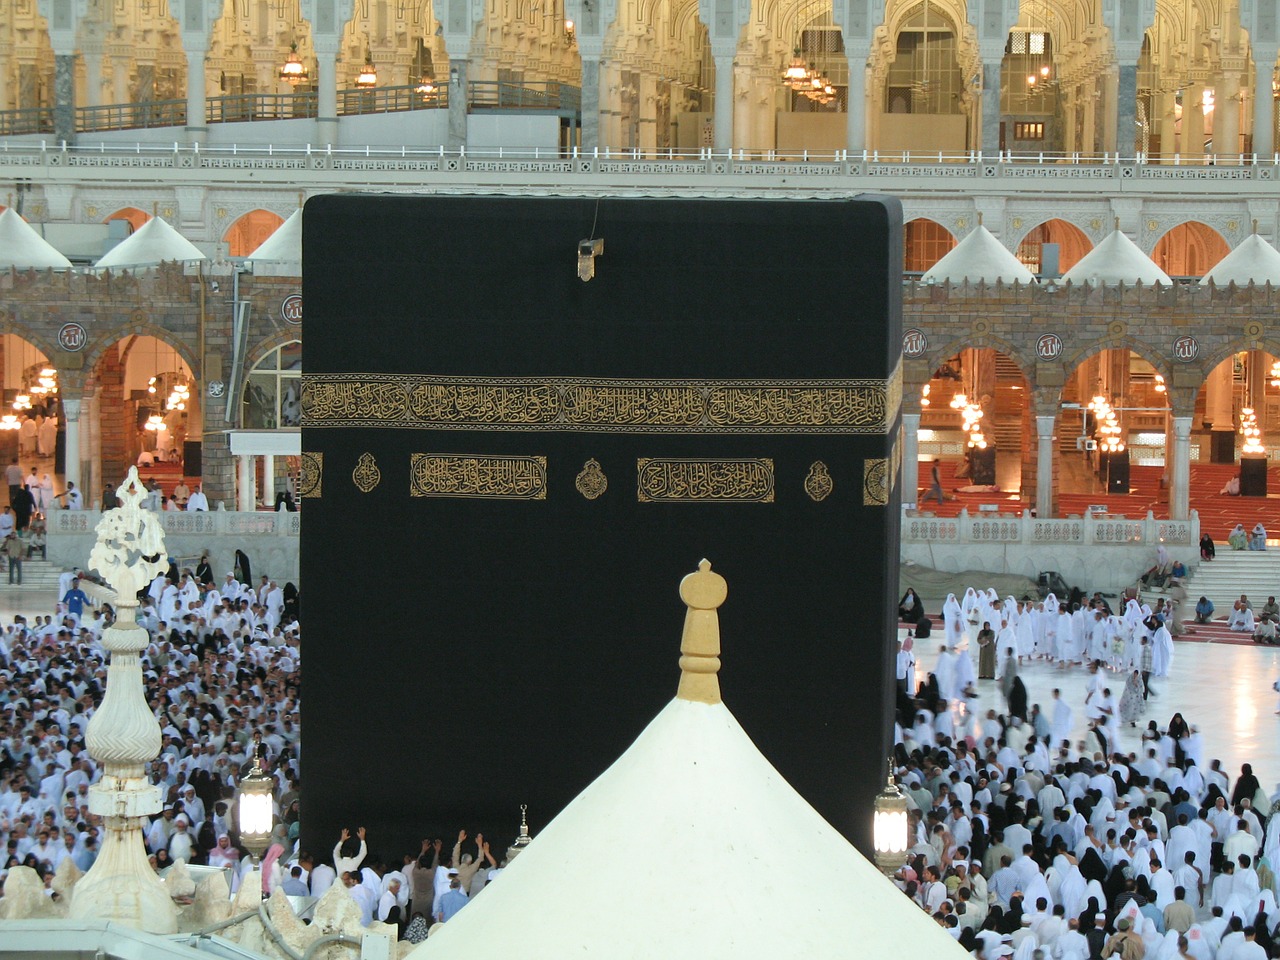 Download free photo of Mecca,cube,black,population,pray - from needpix.com